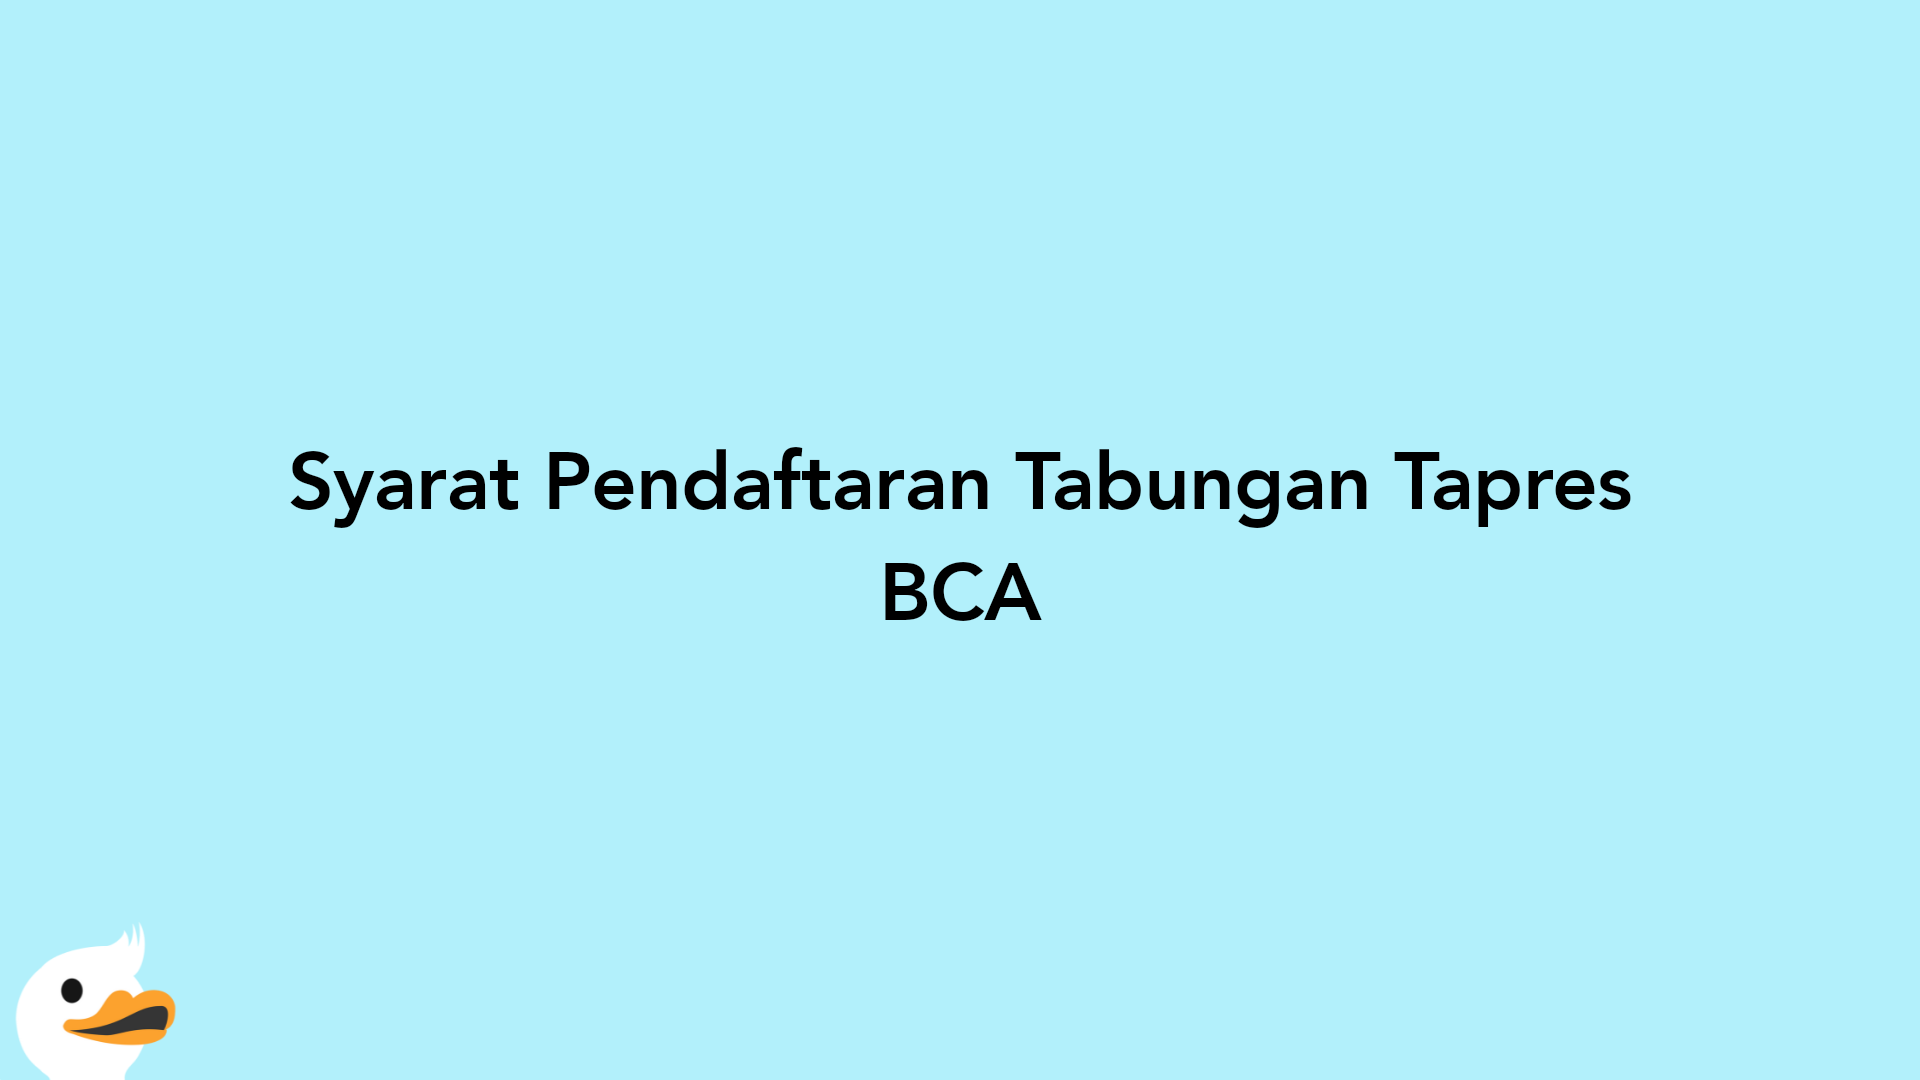 Syarat Pendaftaran Tabungan Tapres BCA